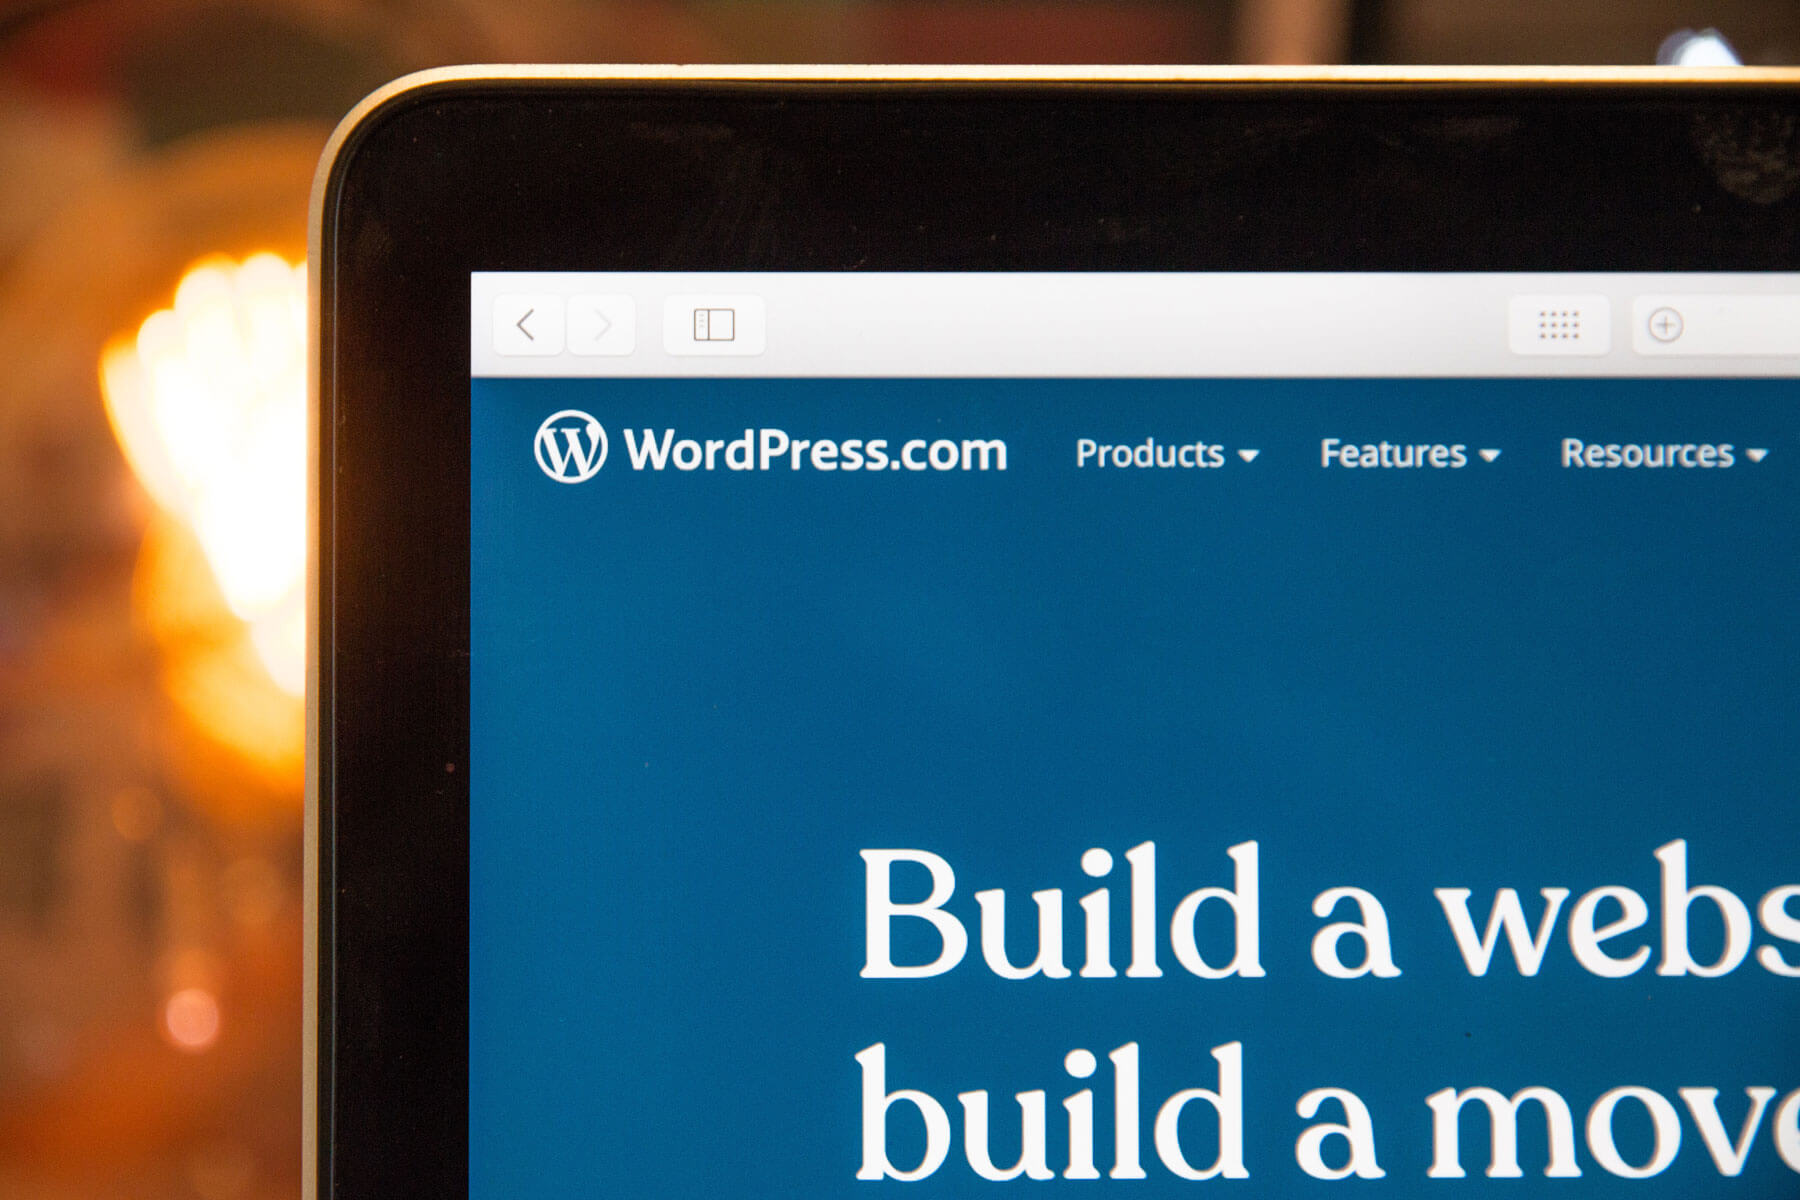 Benefits Of WordPress Web Development